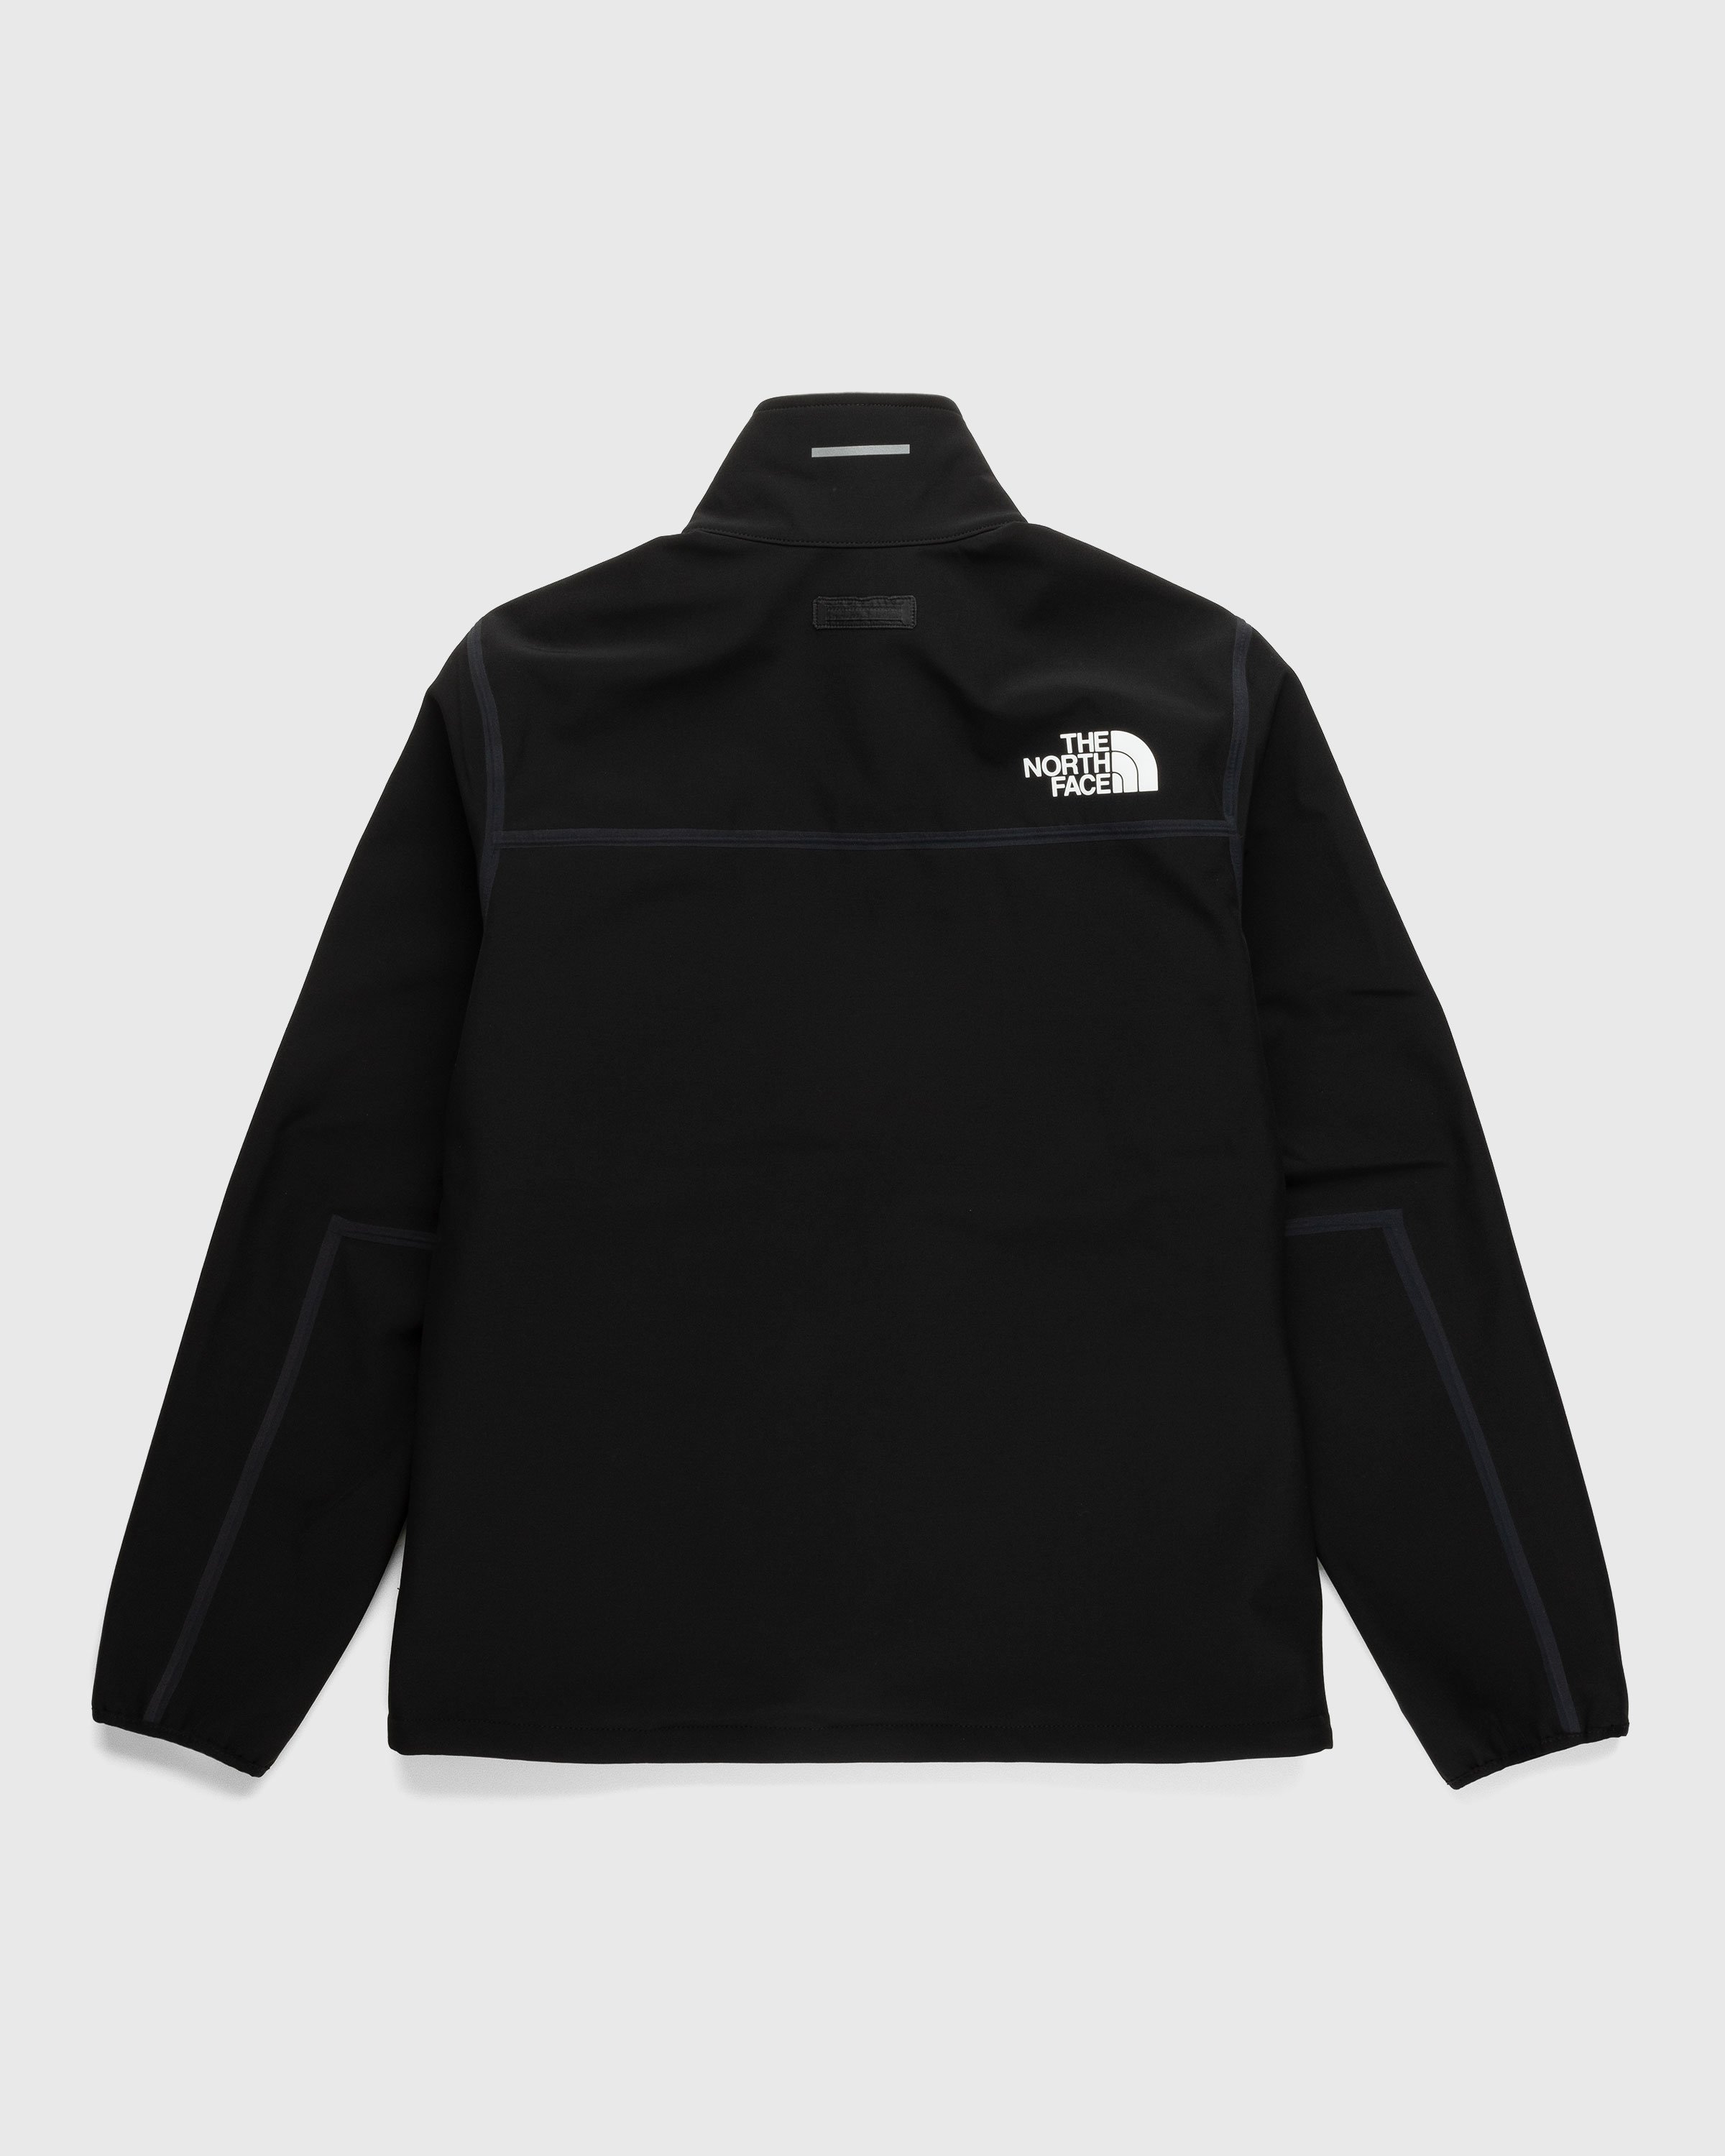 The North Face - RMST Denali Jacket Black - Clothing - Black - Image 2